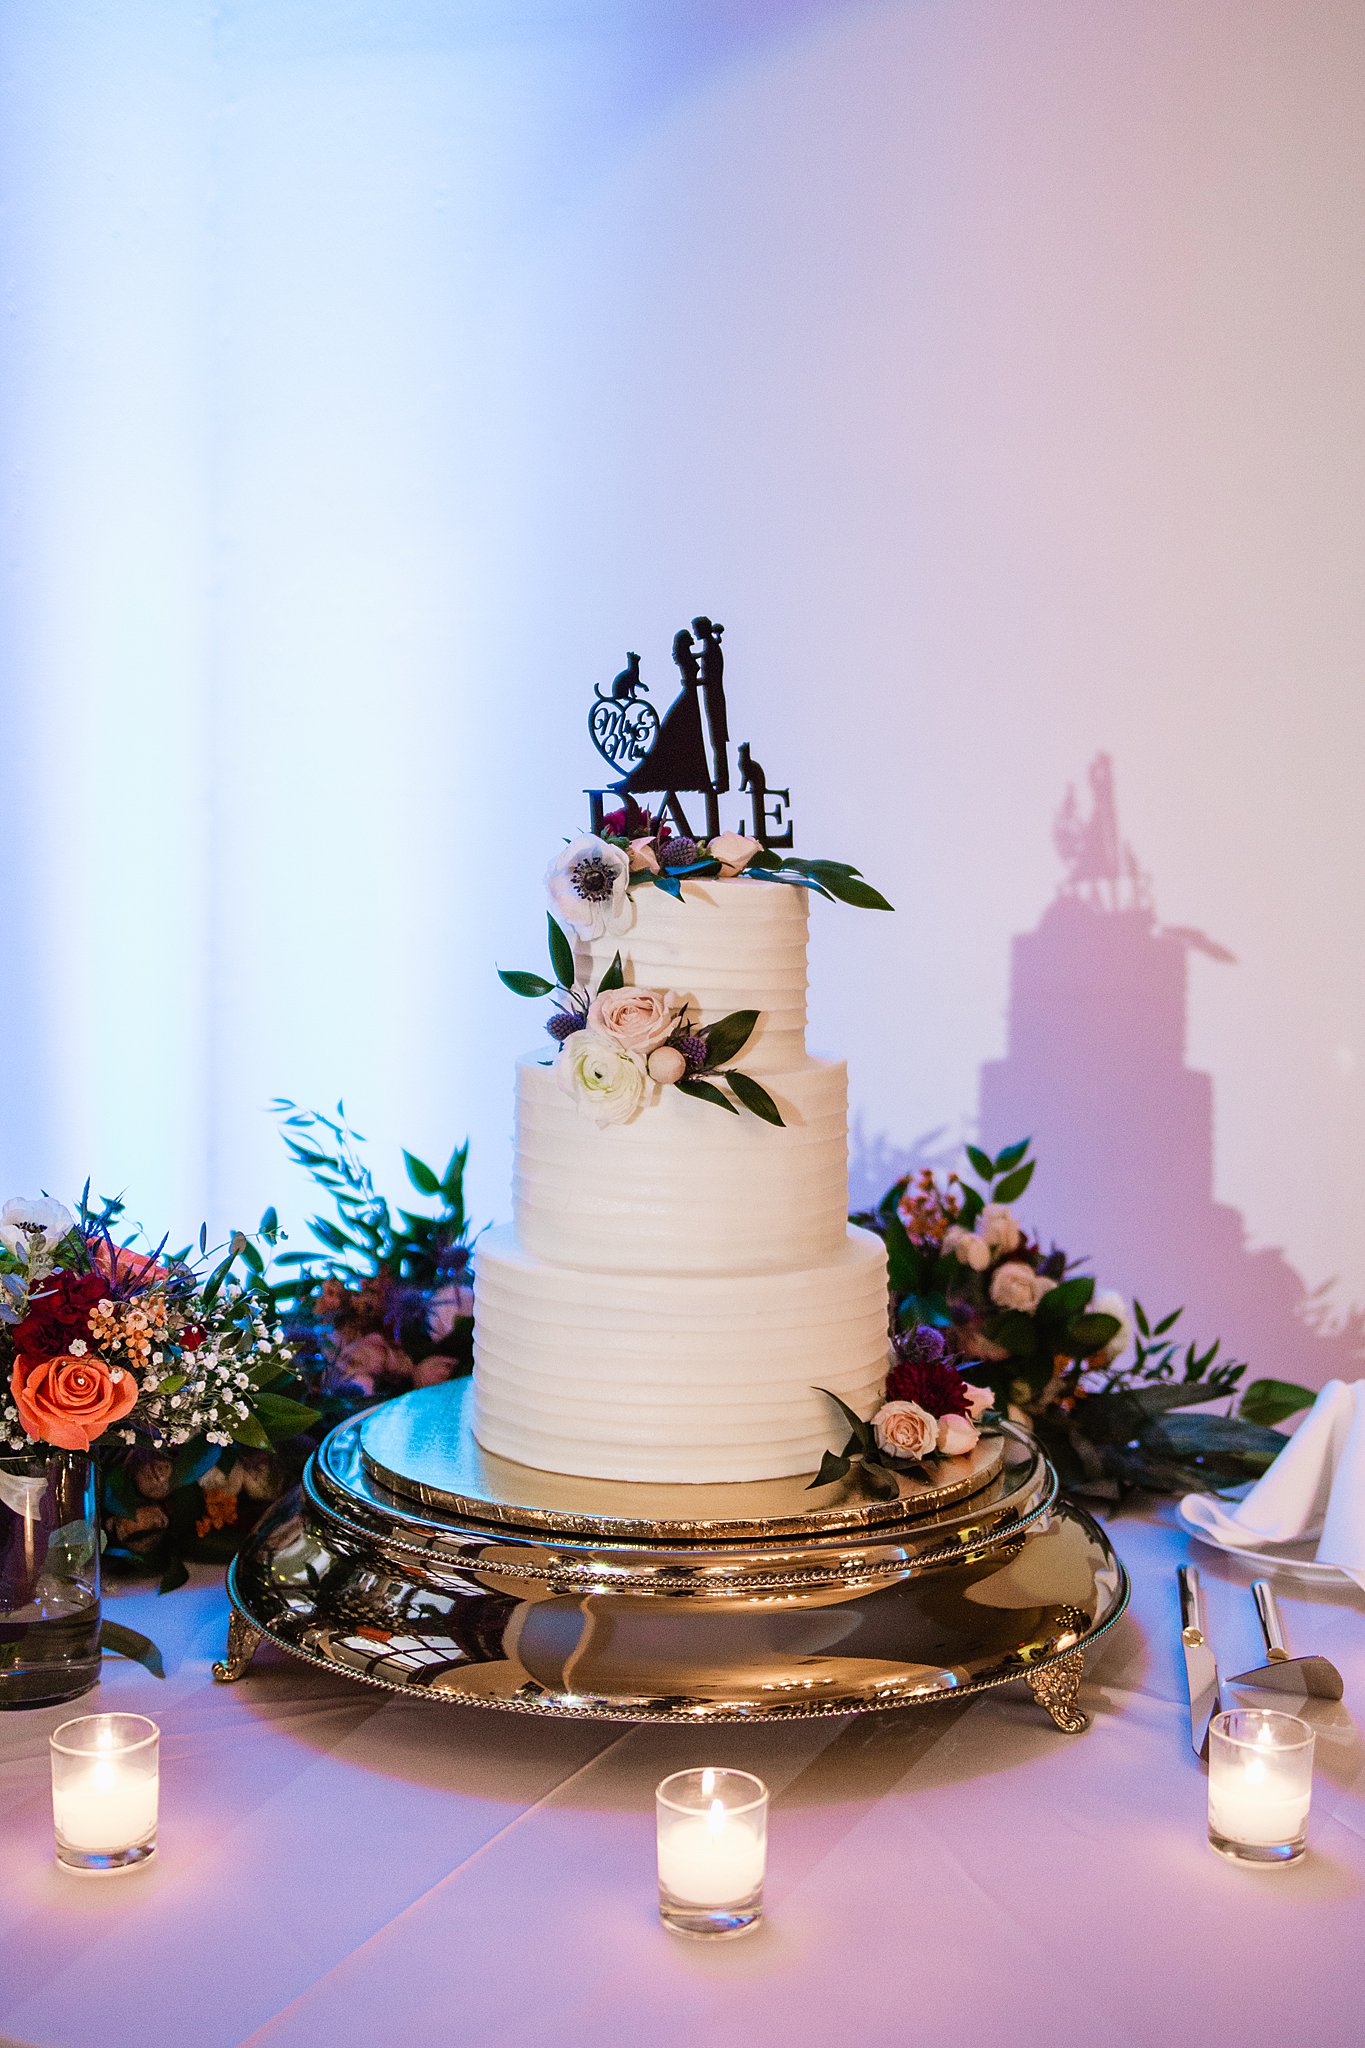 Cake table at Secret Garden Events wedding reception by Arizona wedding photographer PMA Photography.